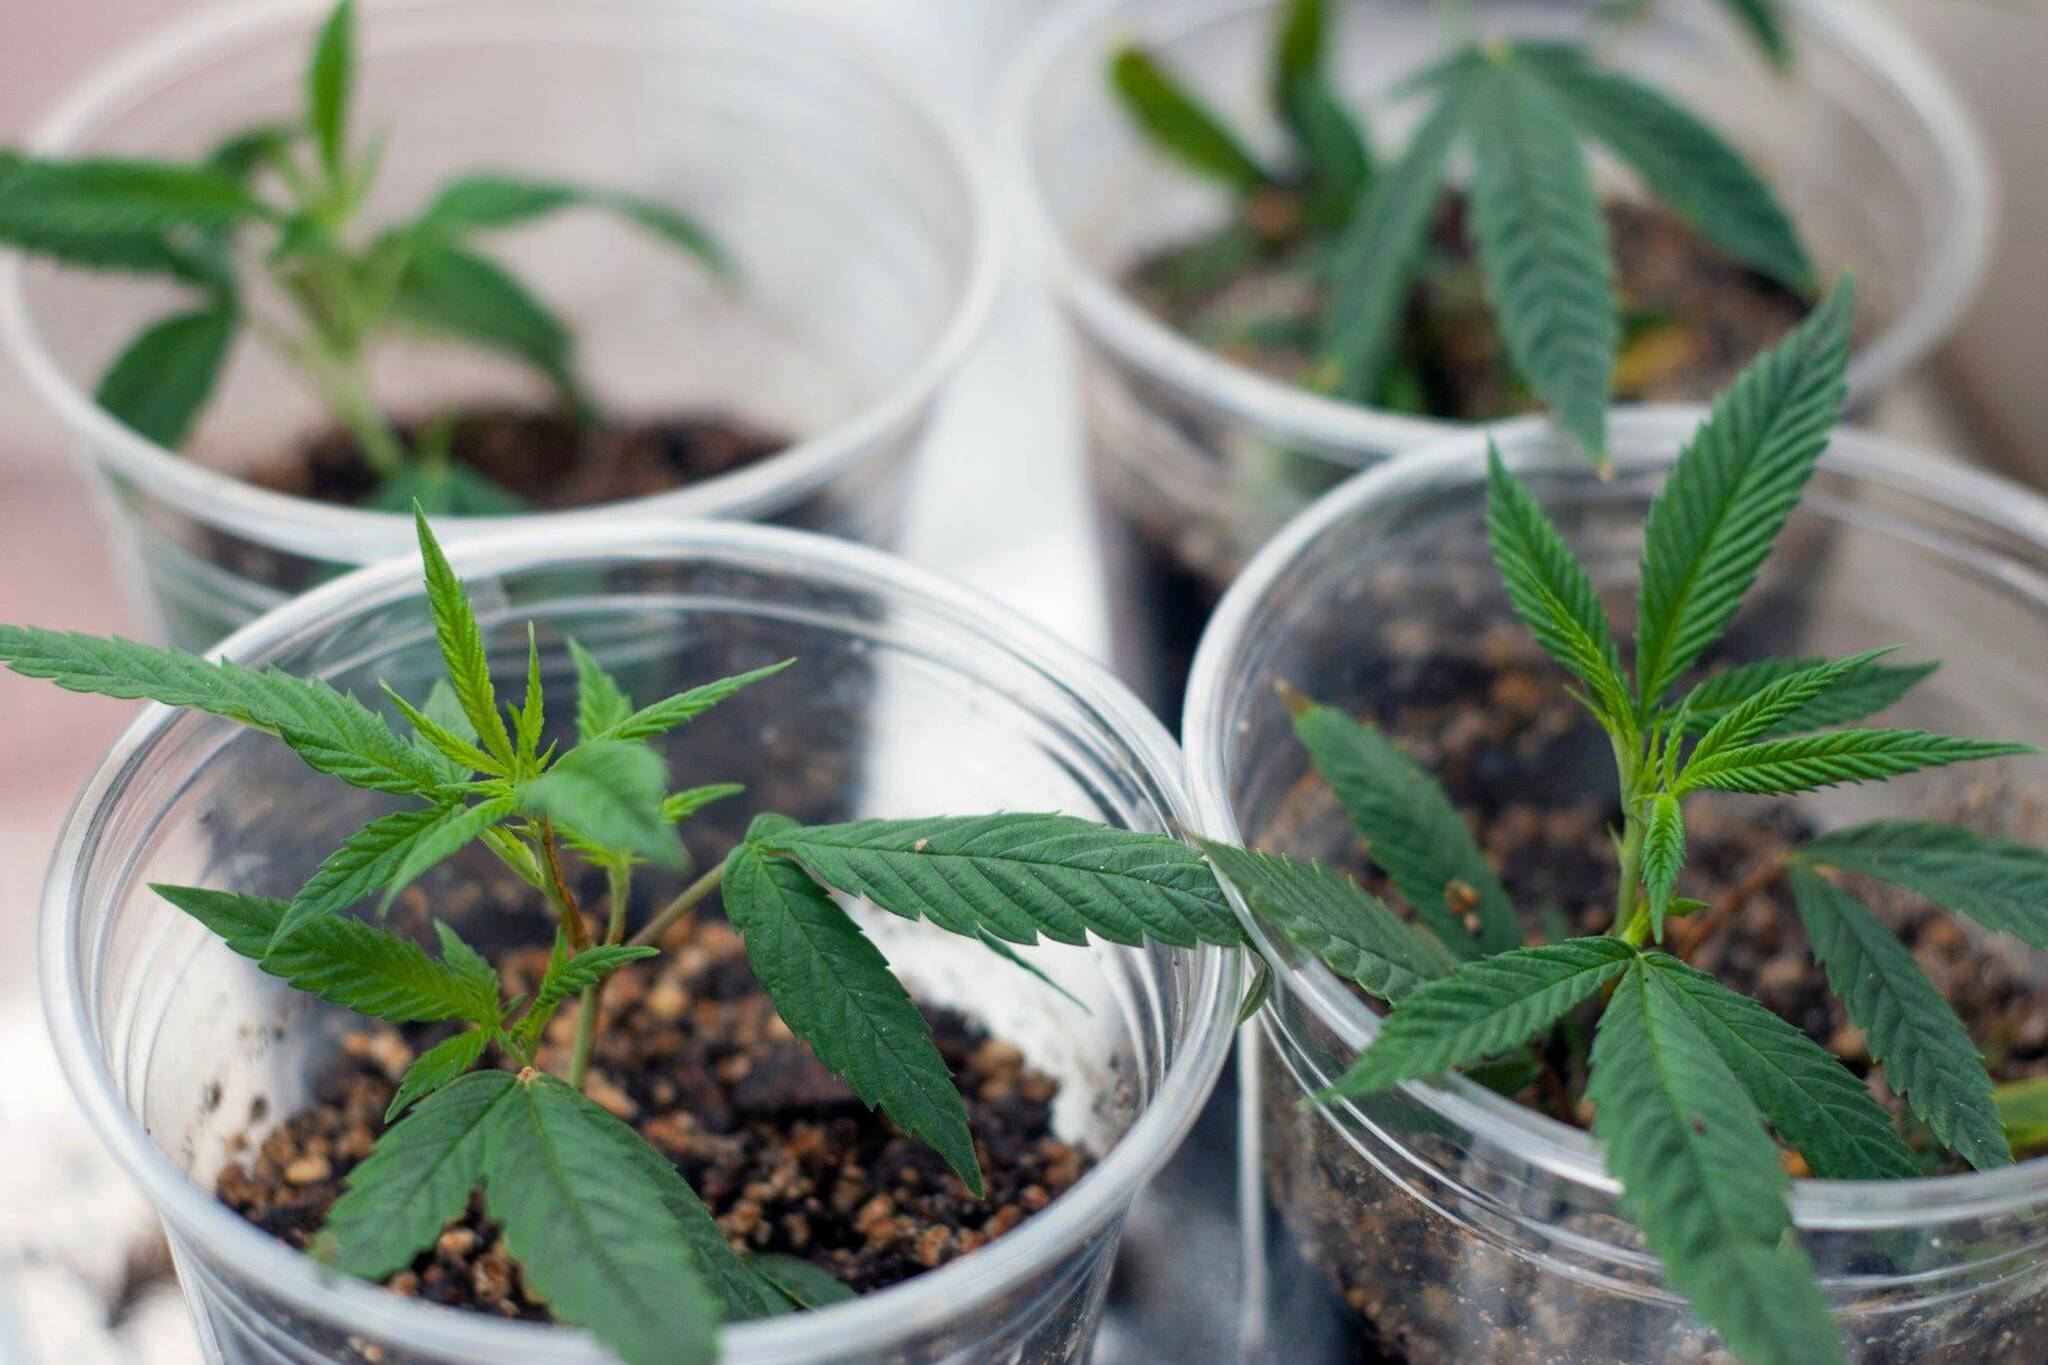 How To Grow Just 1 Marijuana Plant At Home - I Love ...